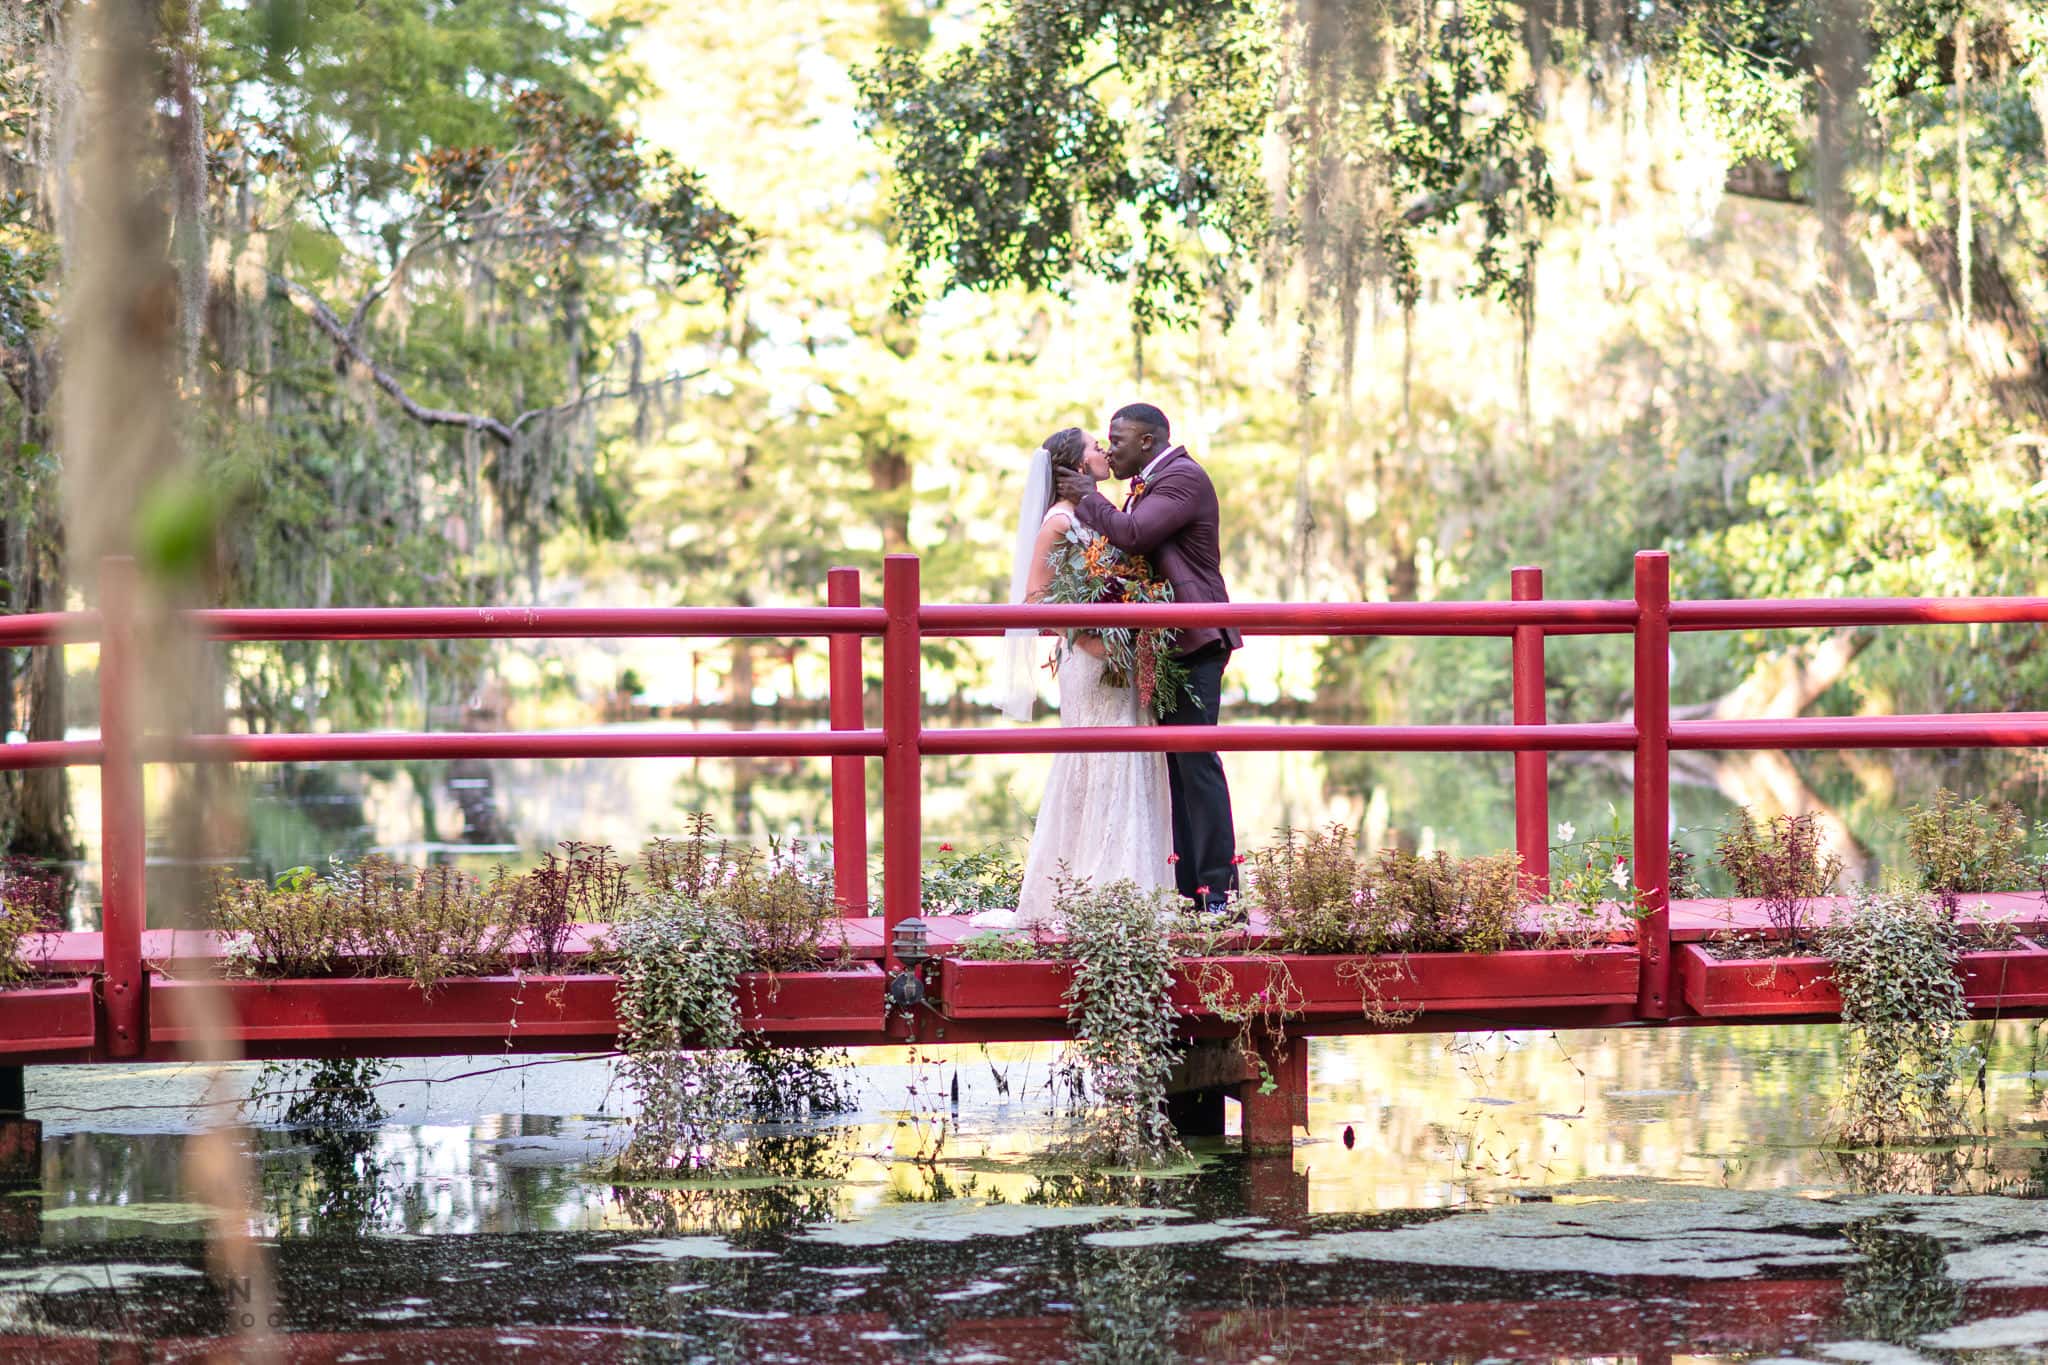 Portraits of bride and groom on the red bridge overlooking the lake - Magnolia Plantation - Charleston, SC